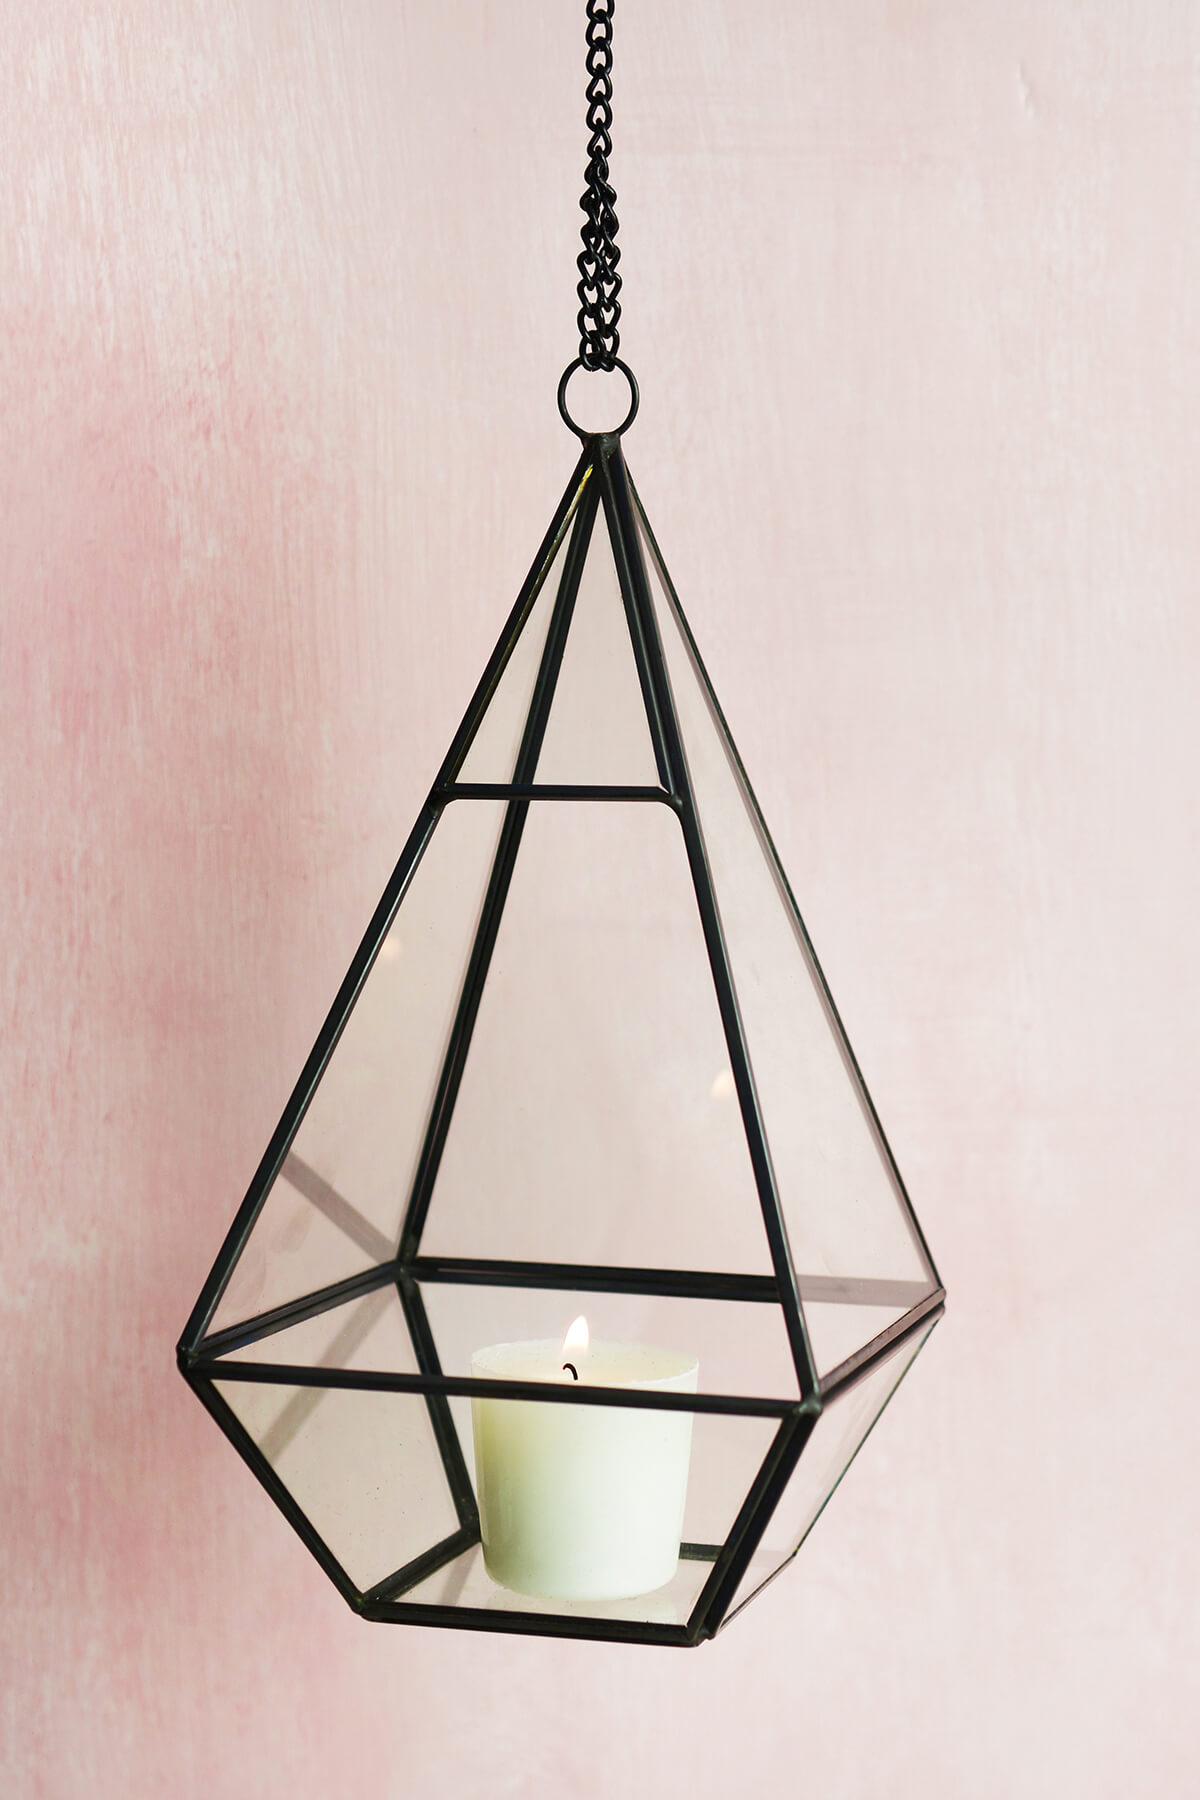 Hanging 9" Hexagonal Based Glass & Metal Terrarium